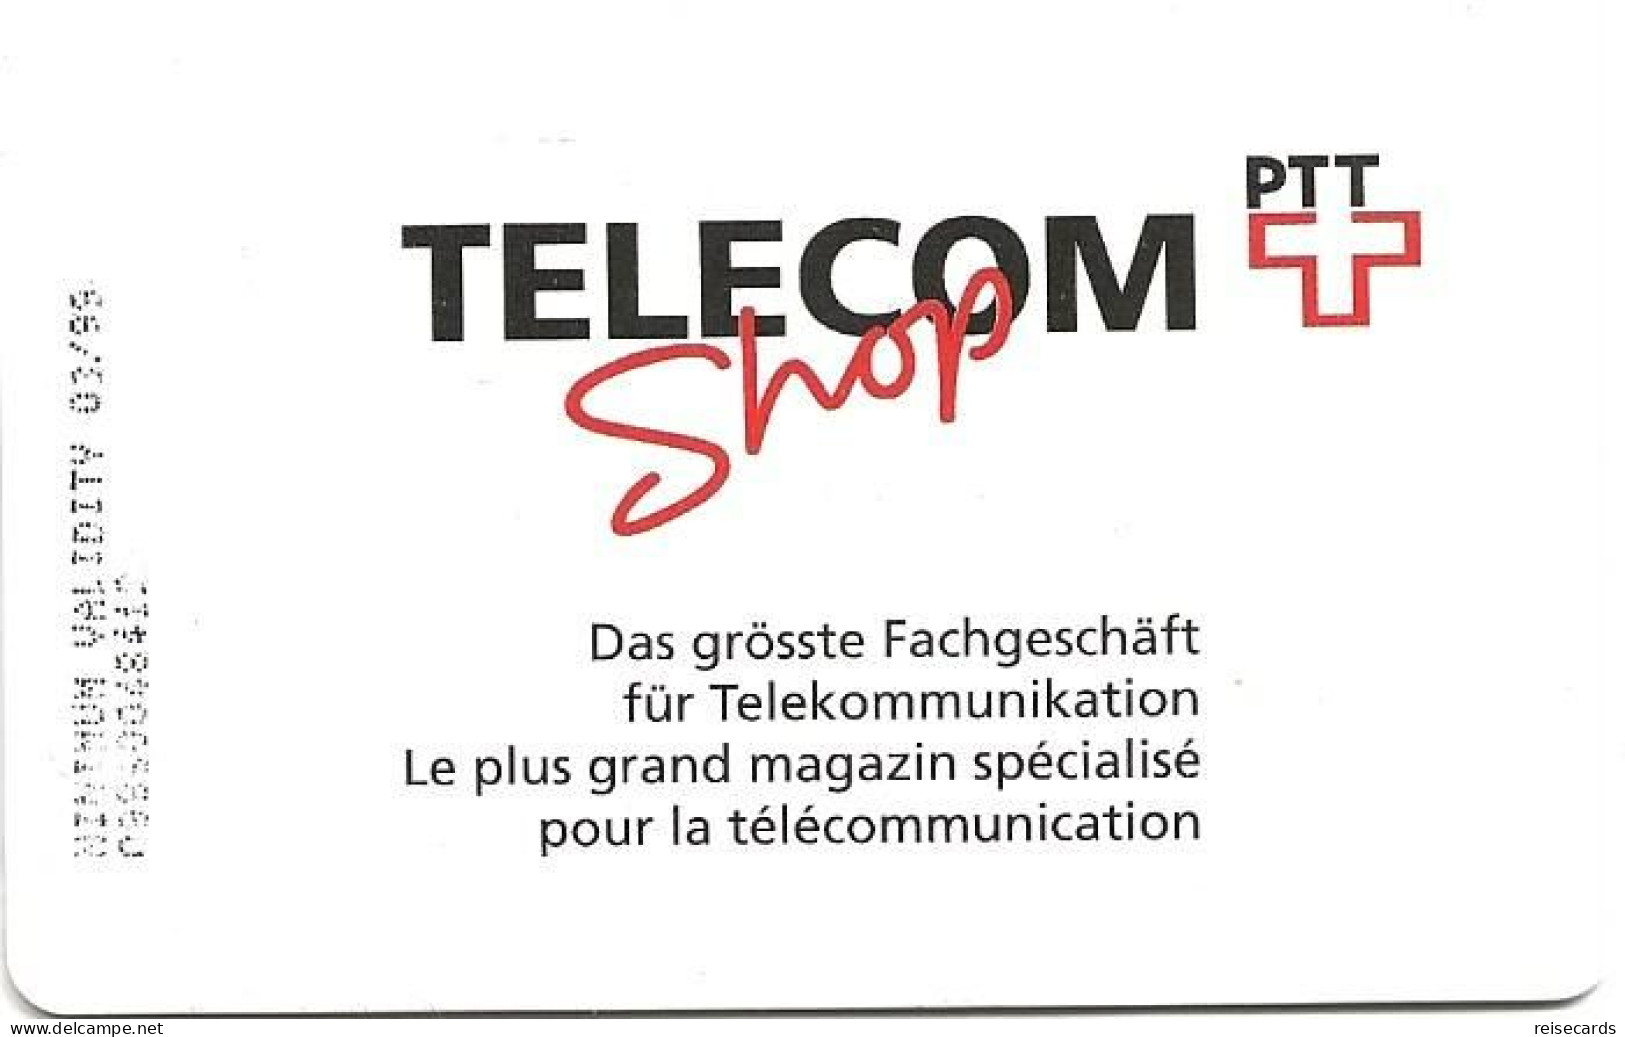 Switzerland: Swiss Telecom V 09/96 Telecom PTT, Direktion Biel - Suisse